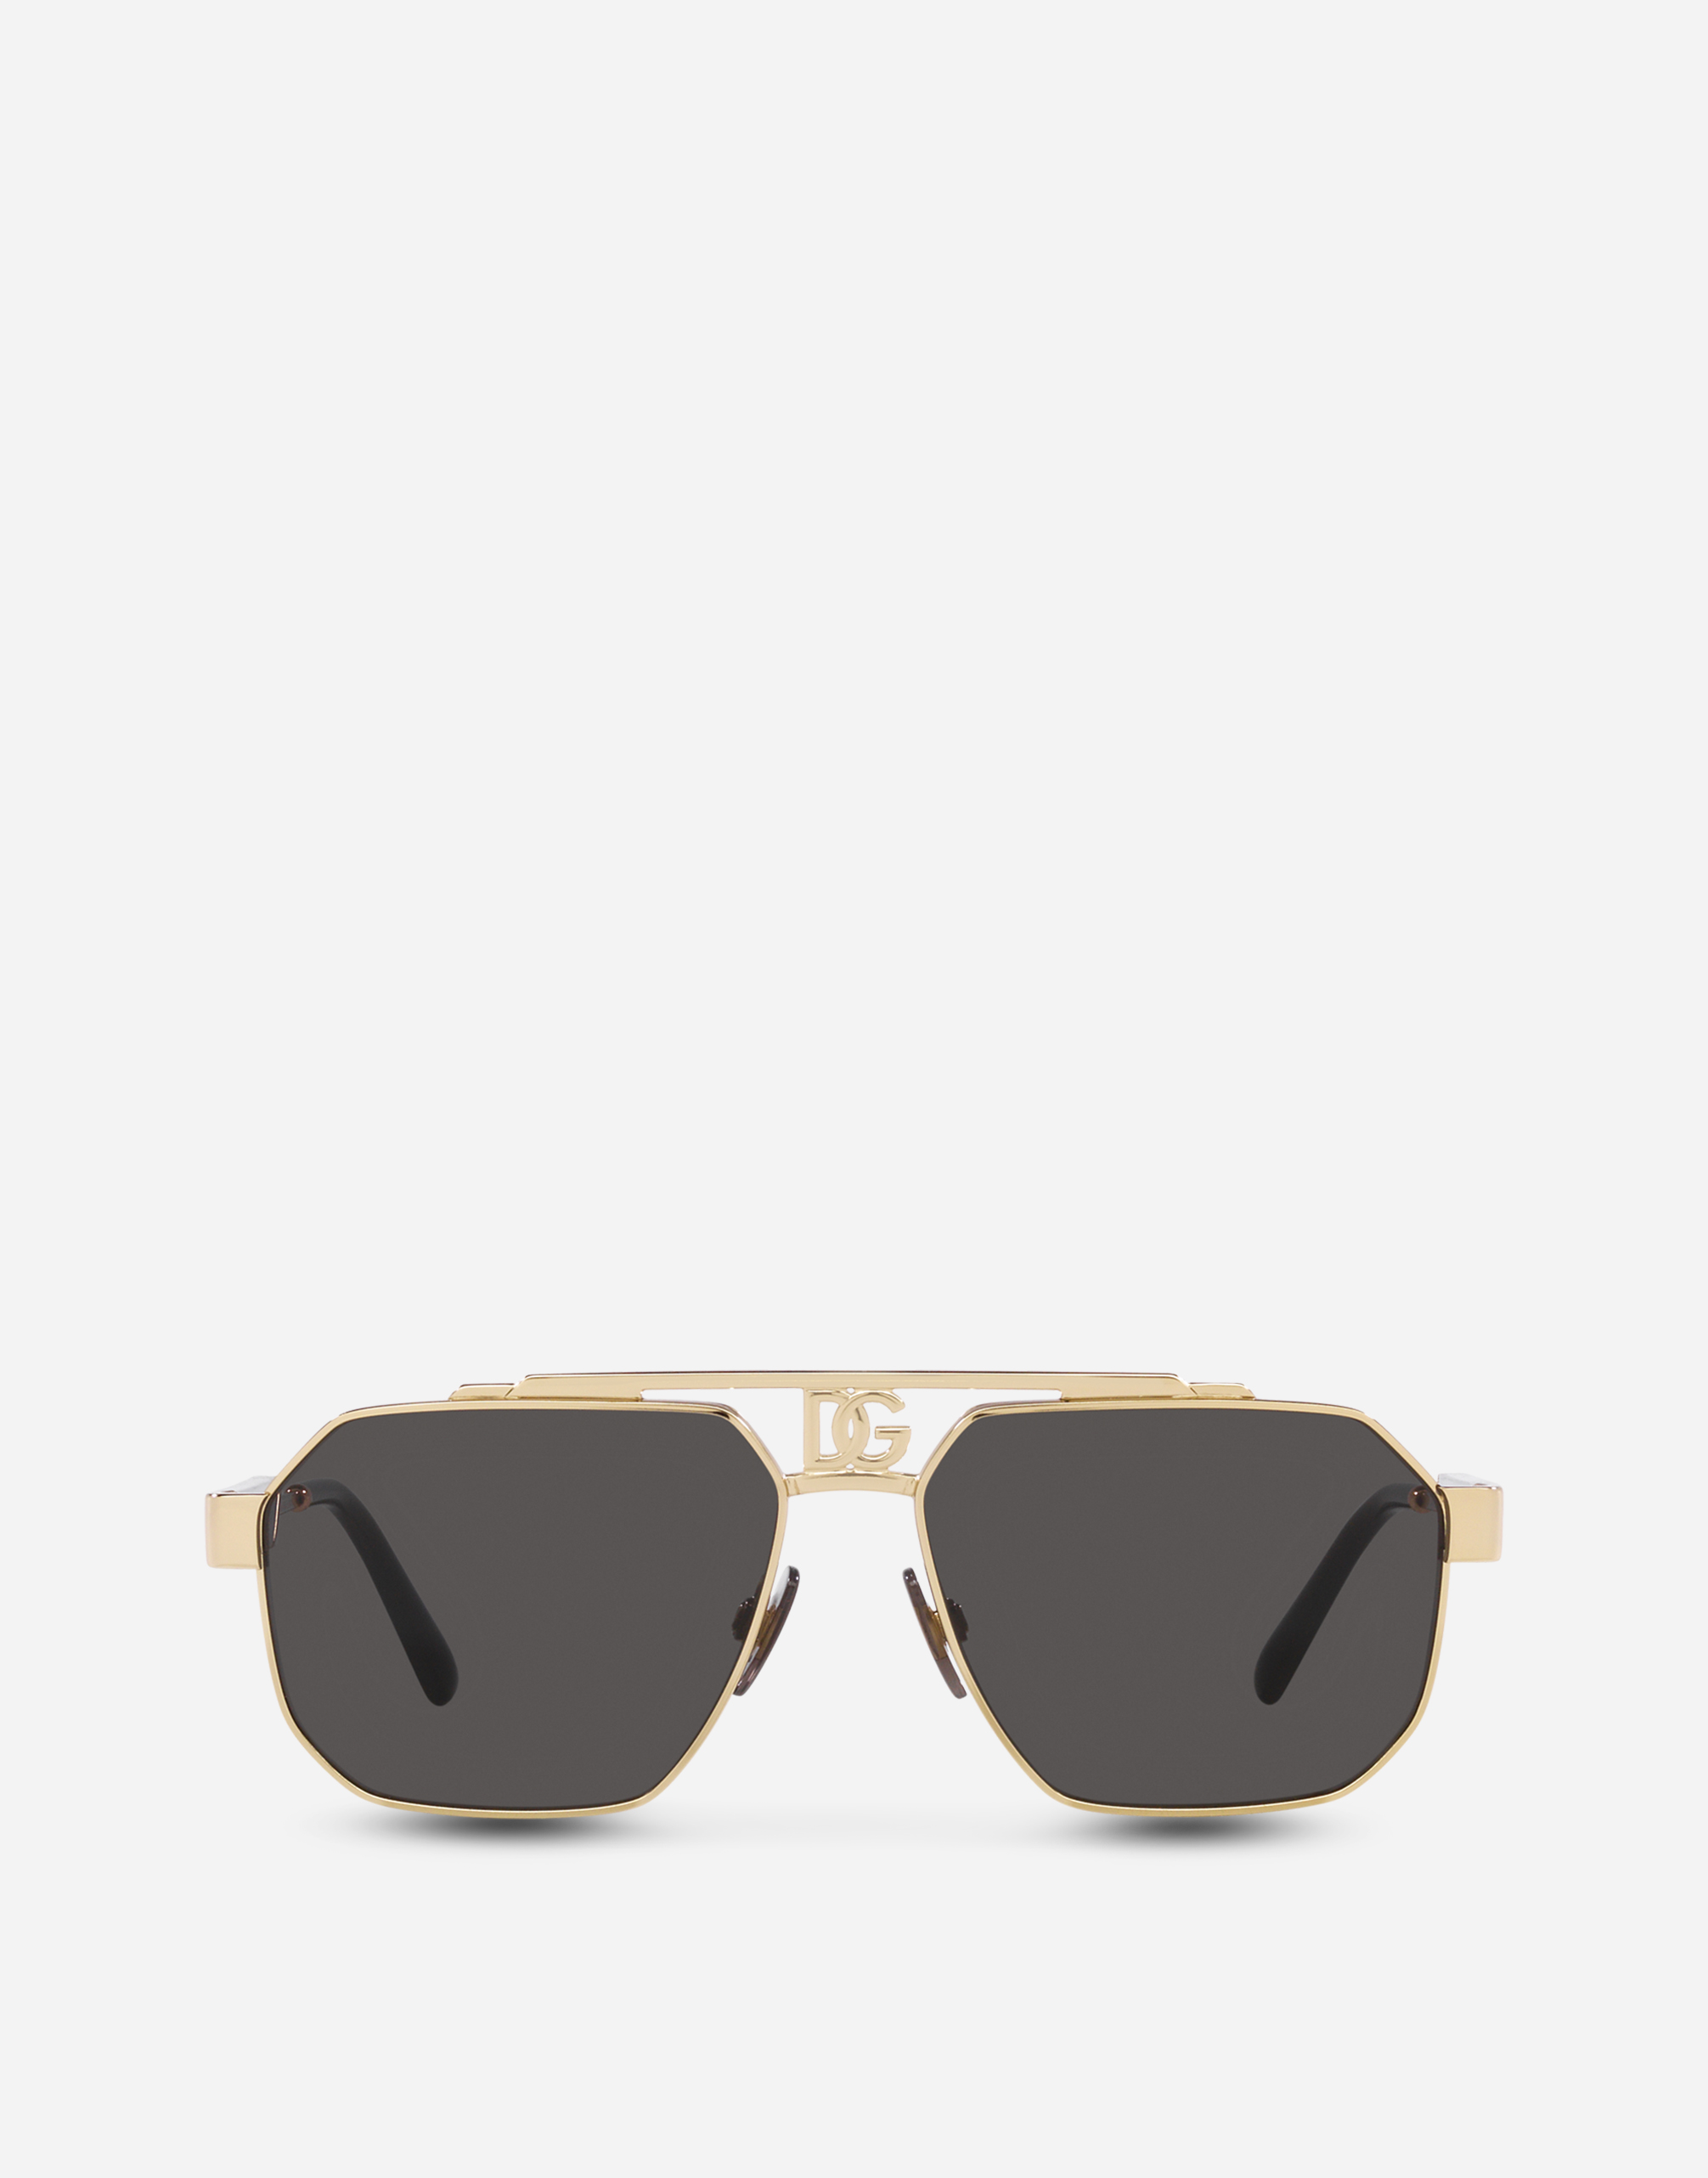 Dolce & Gabbana Dark Sicily Sunglasses In Gold